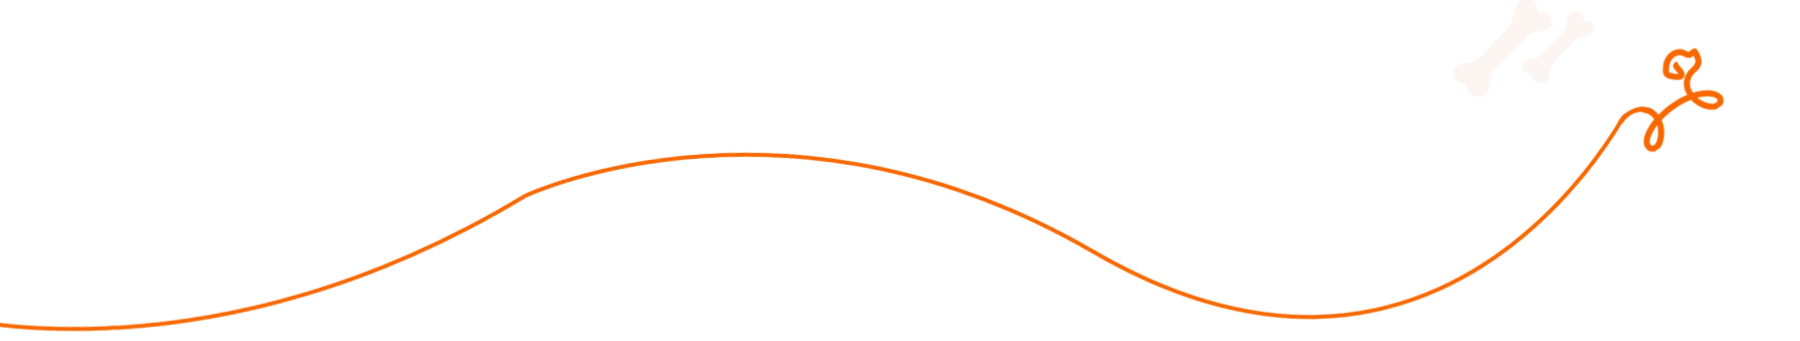 Icon orange line with orange dog